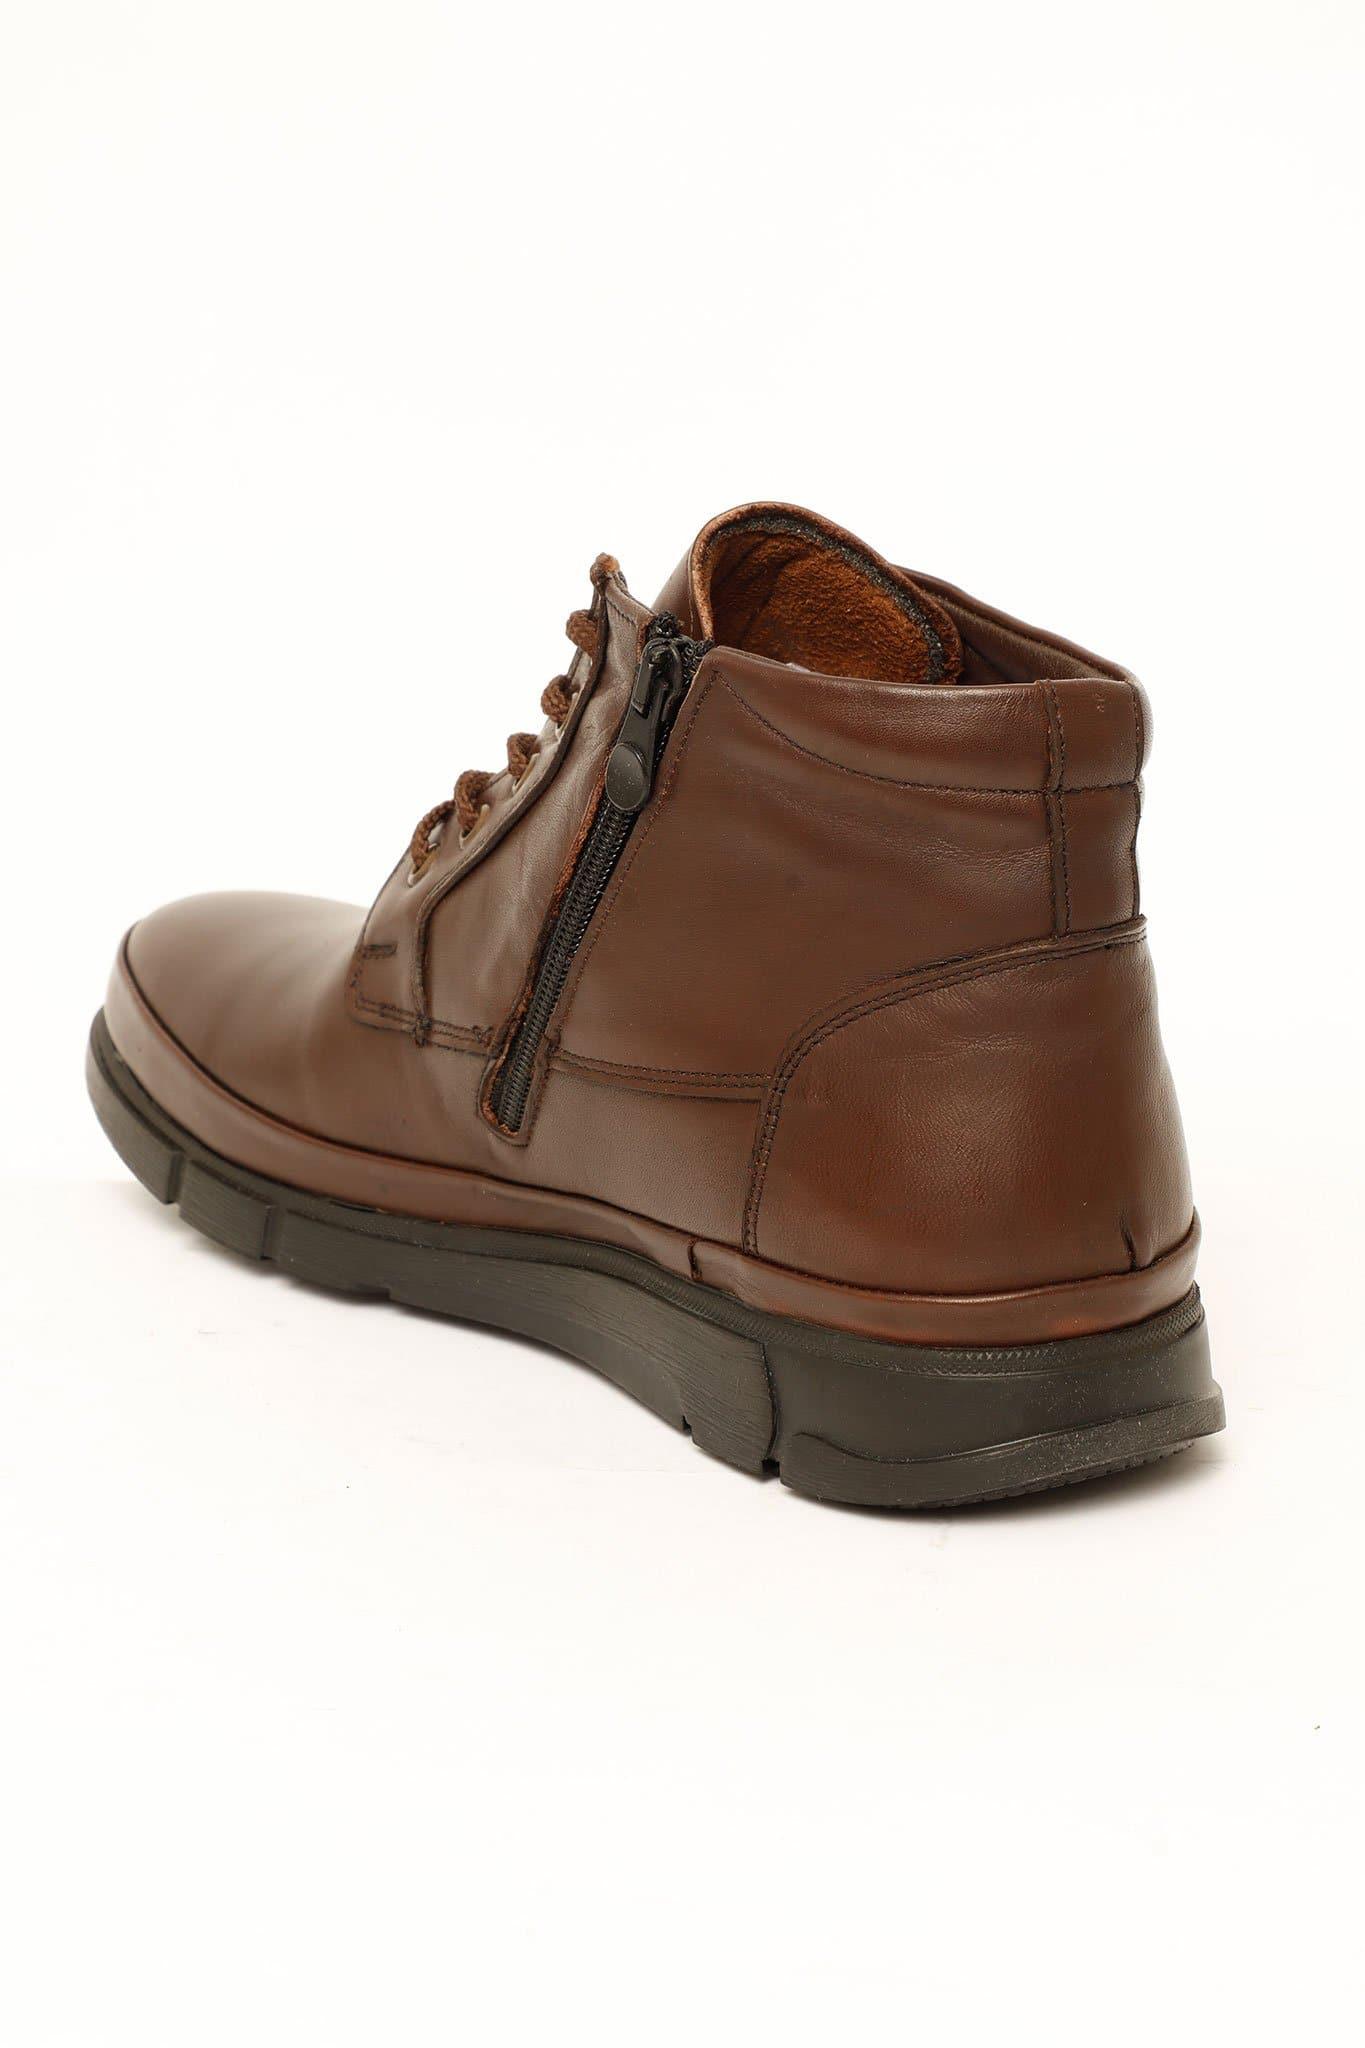 PB MARLO MEN'S ANKLE BOOTS 4096DRKBRN, SHOE, CORADO, boots, dark brown, leather, men, shoe, coradomoda, coradomoda.com